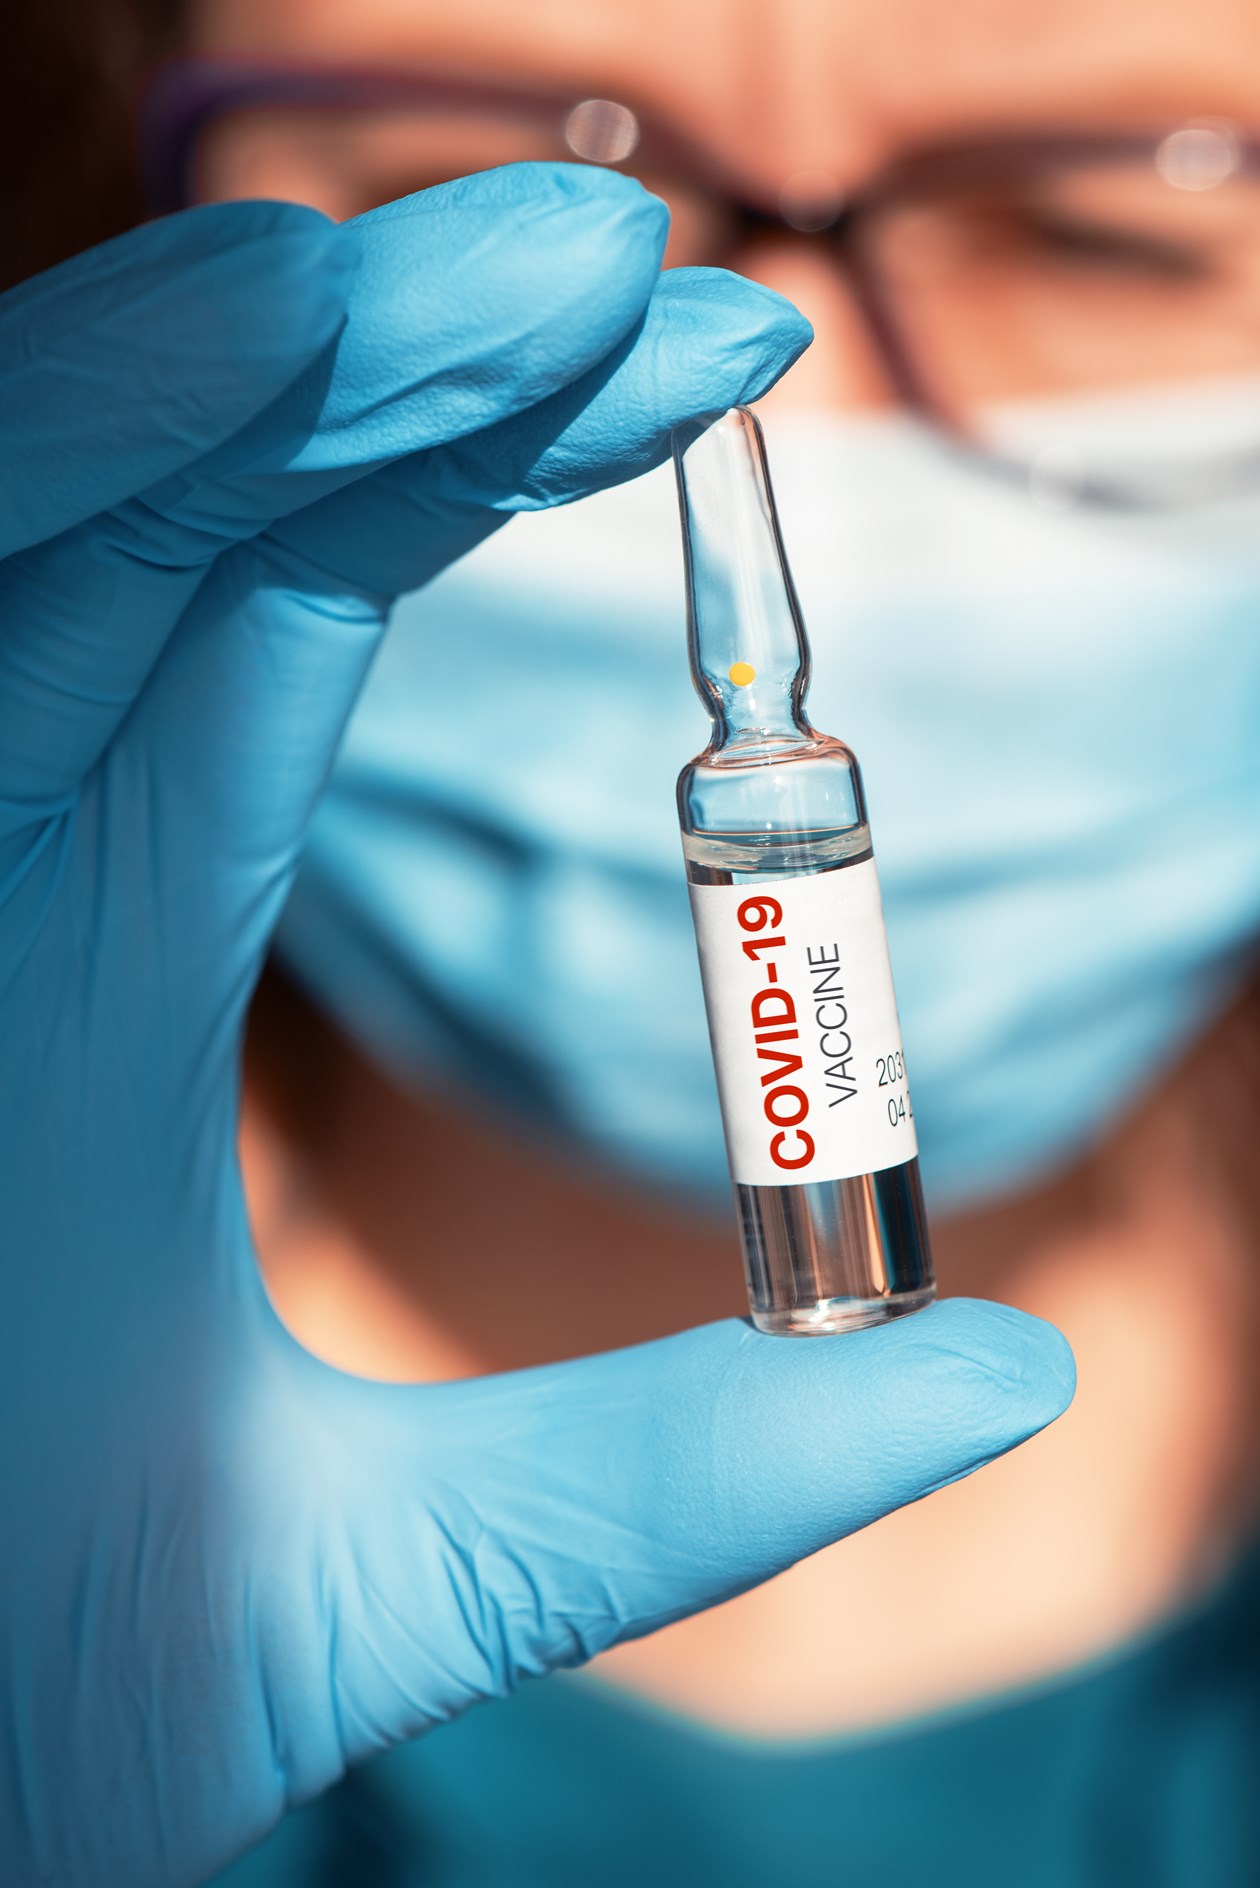 Corona vaccination